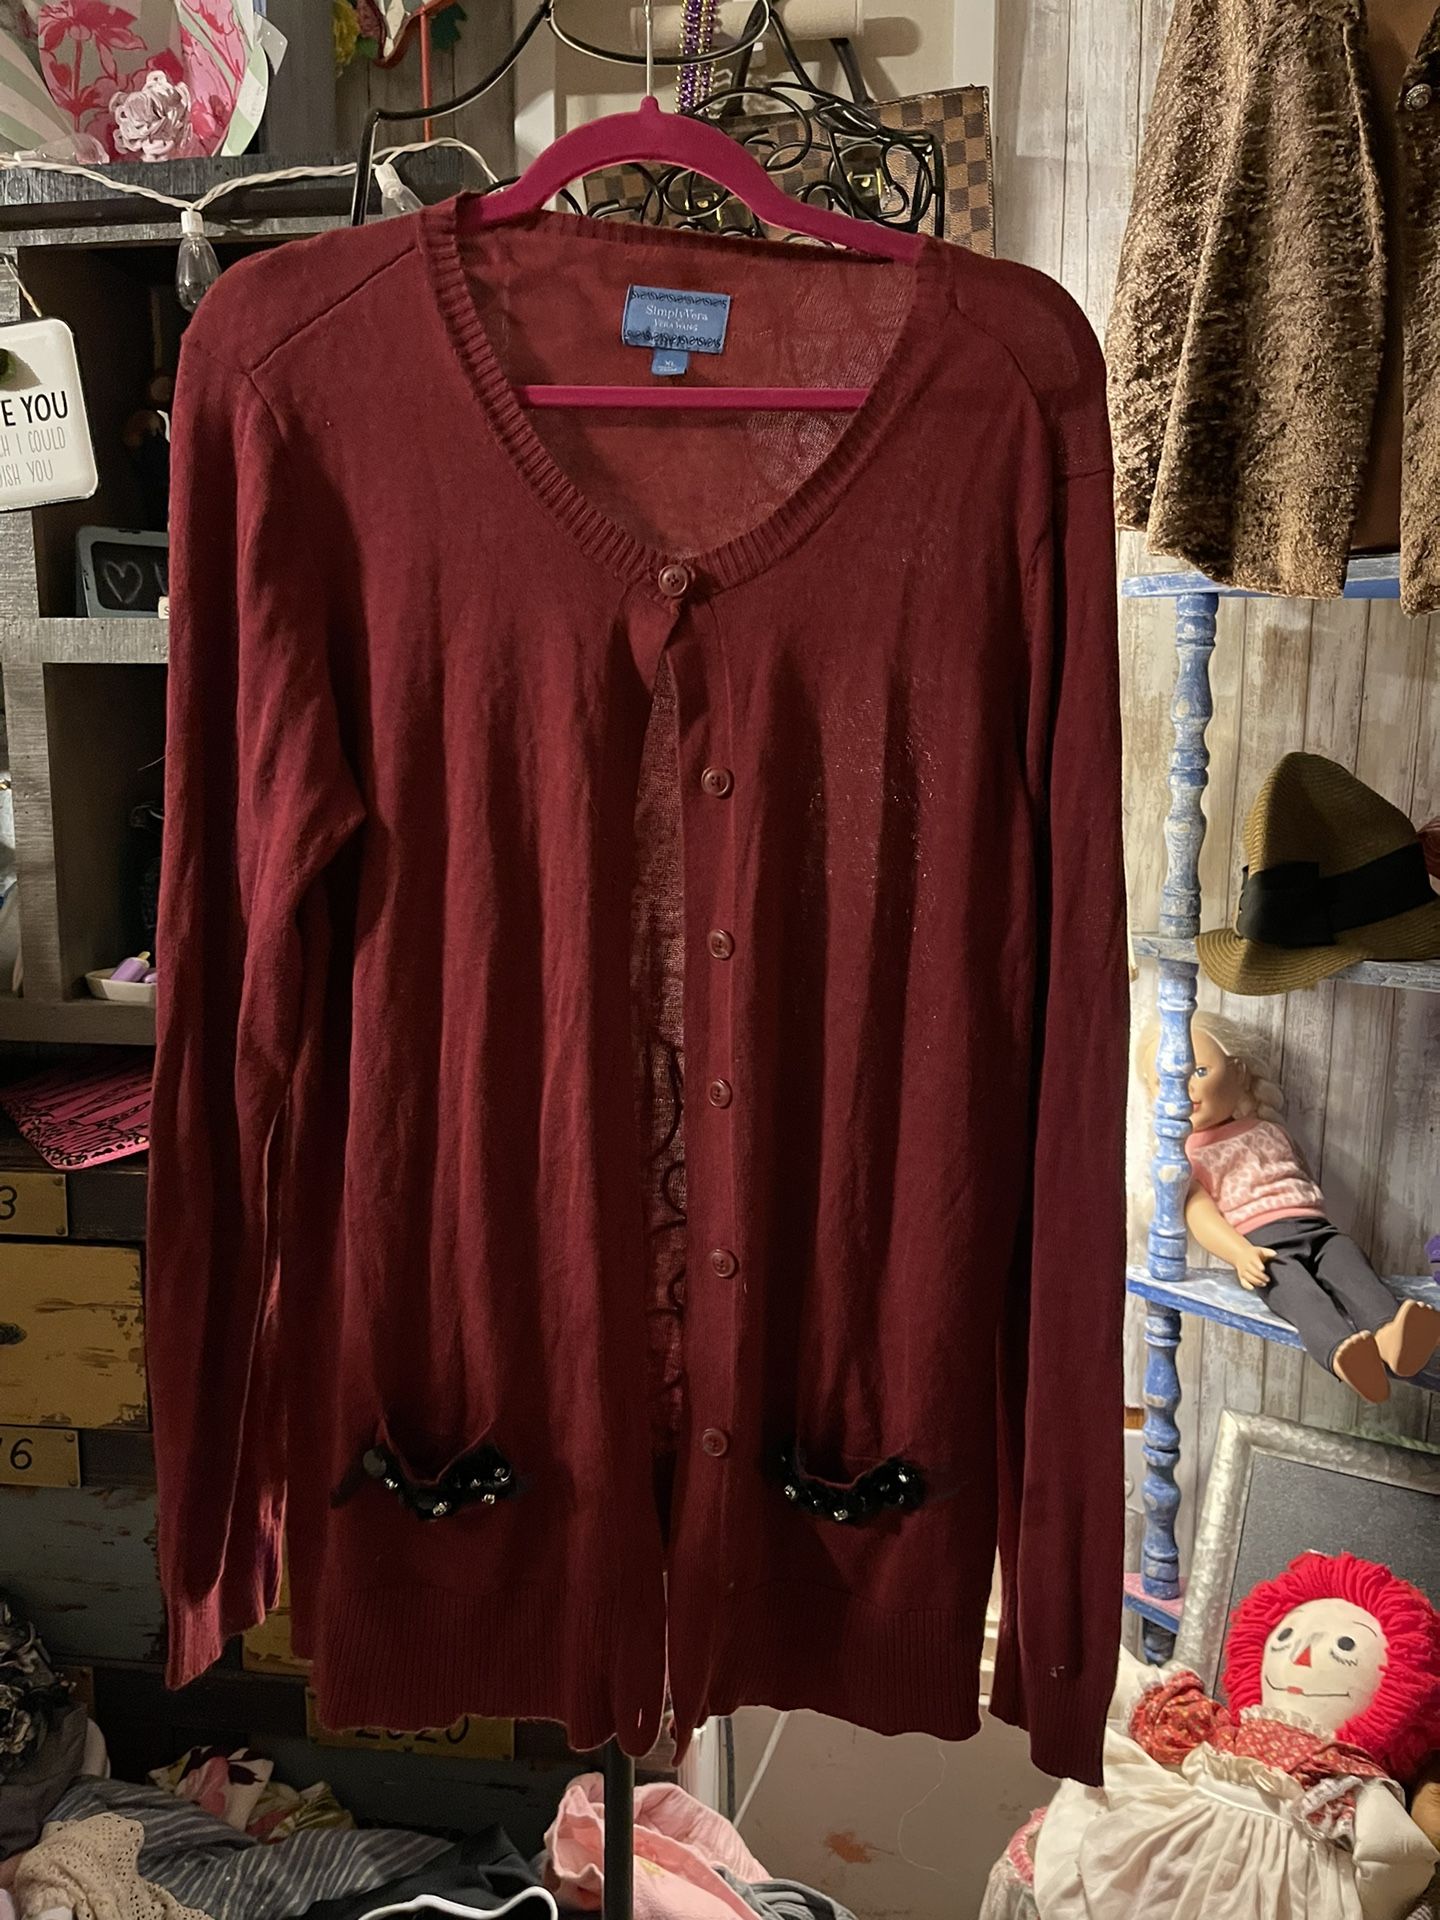 Like New Simply Vera Wang Red Knit Burgundy Sequin Cardigan Sweater XL Smoke Free